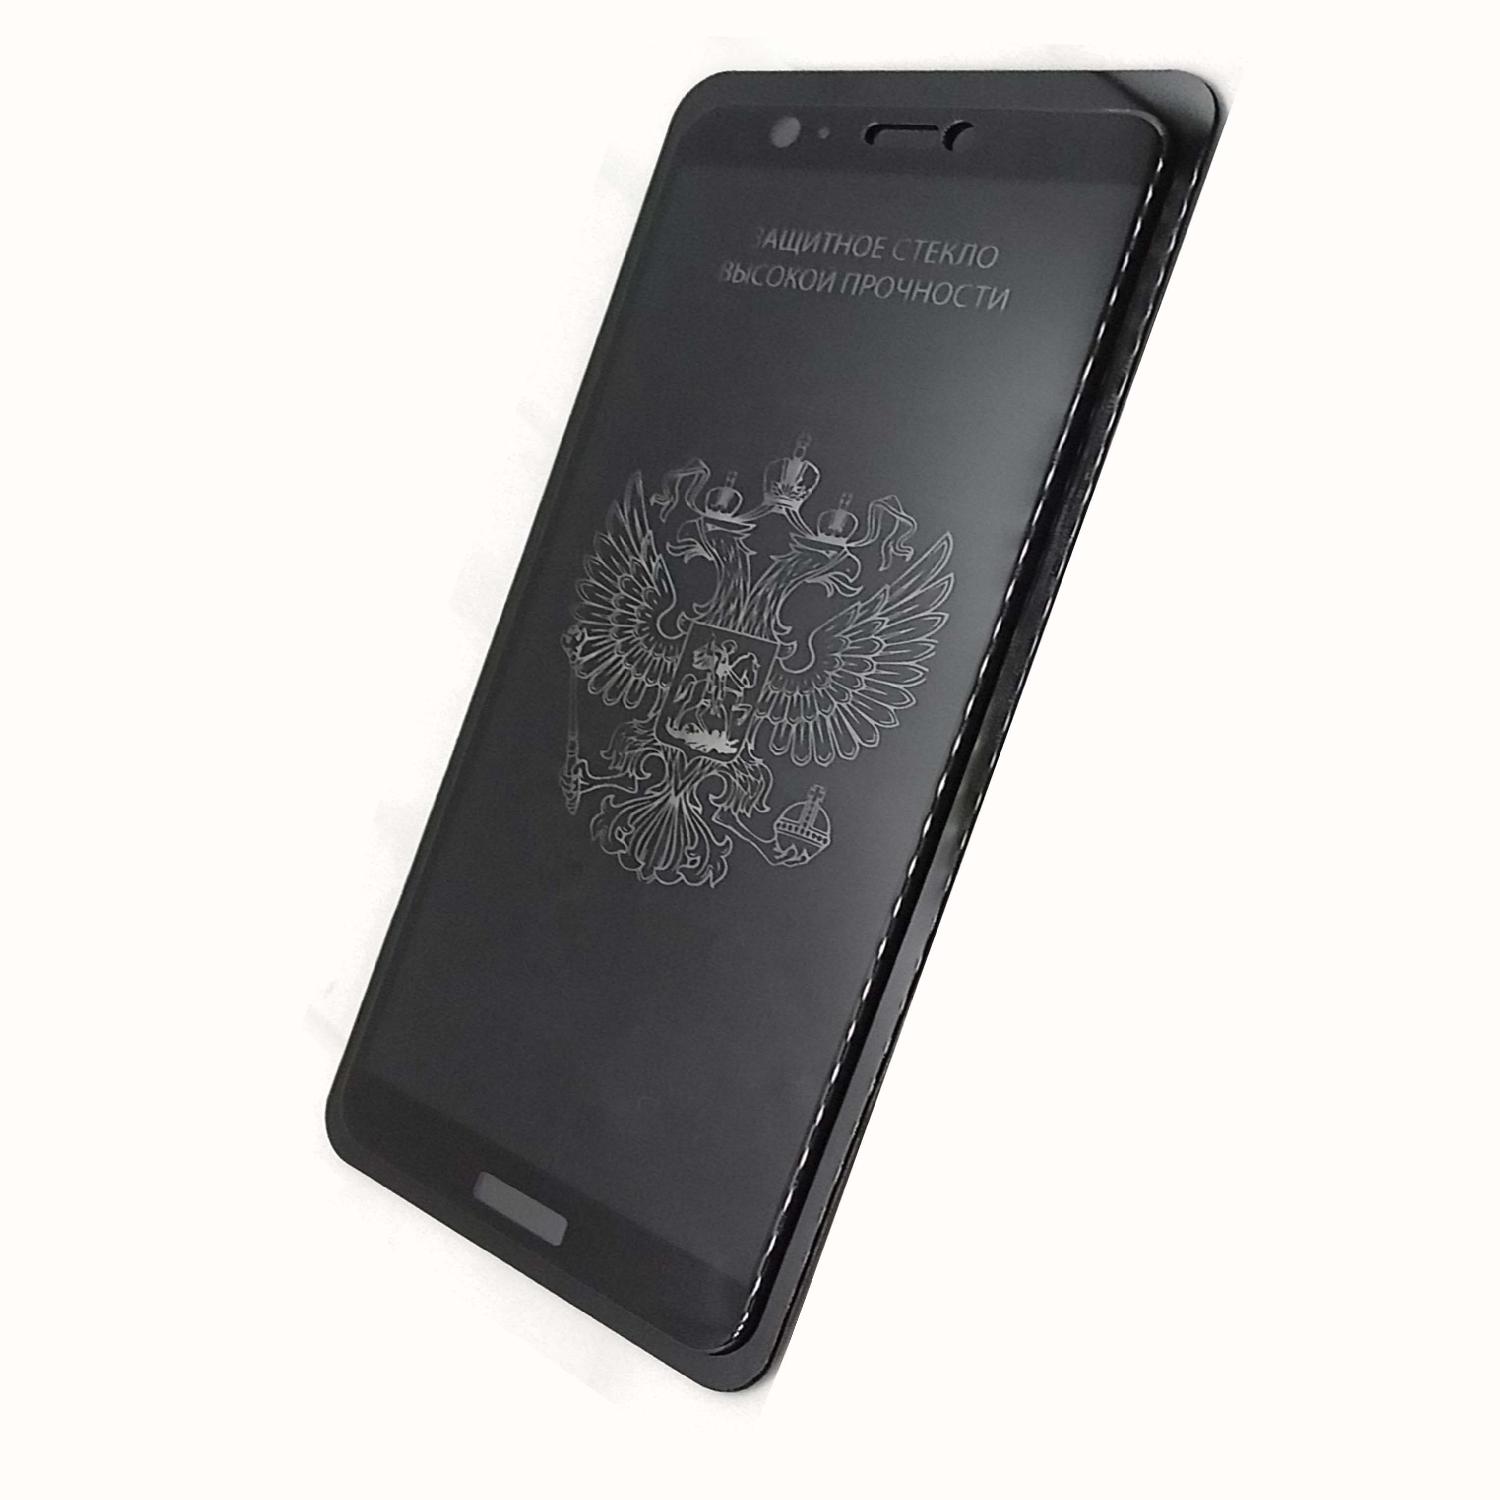 Защитное стекло телефона Huawei P Smart (тех упак)2018